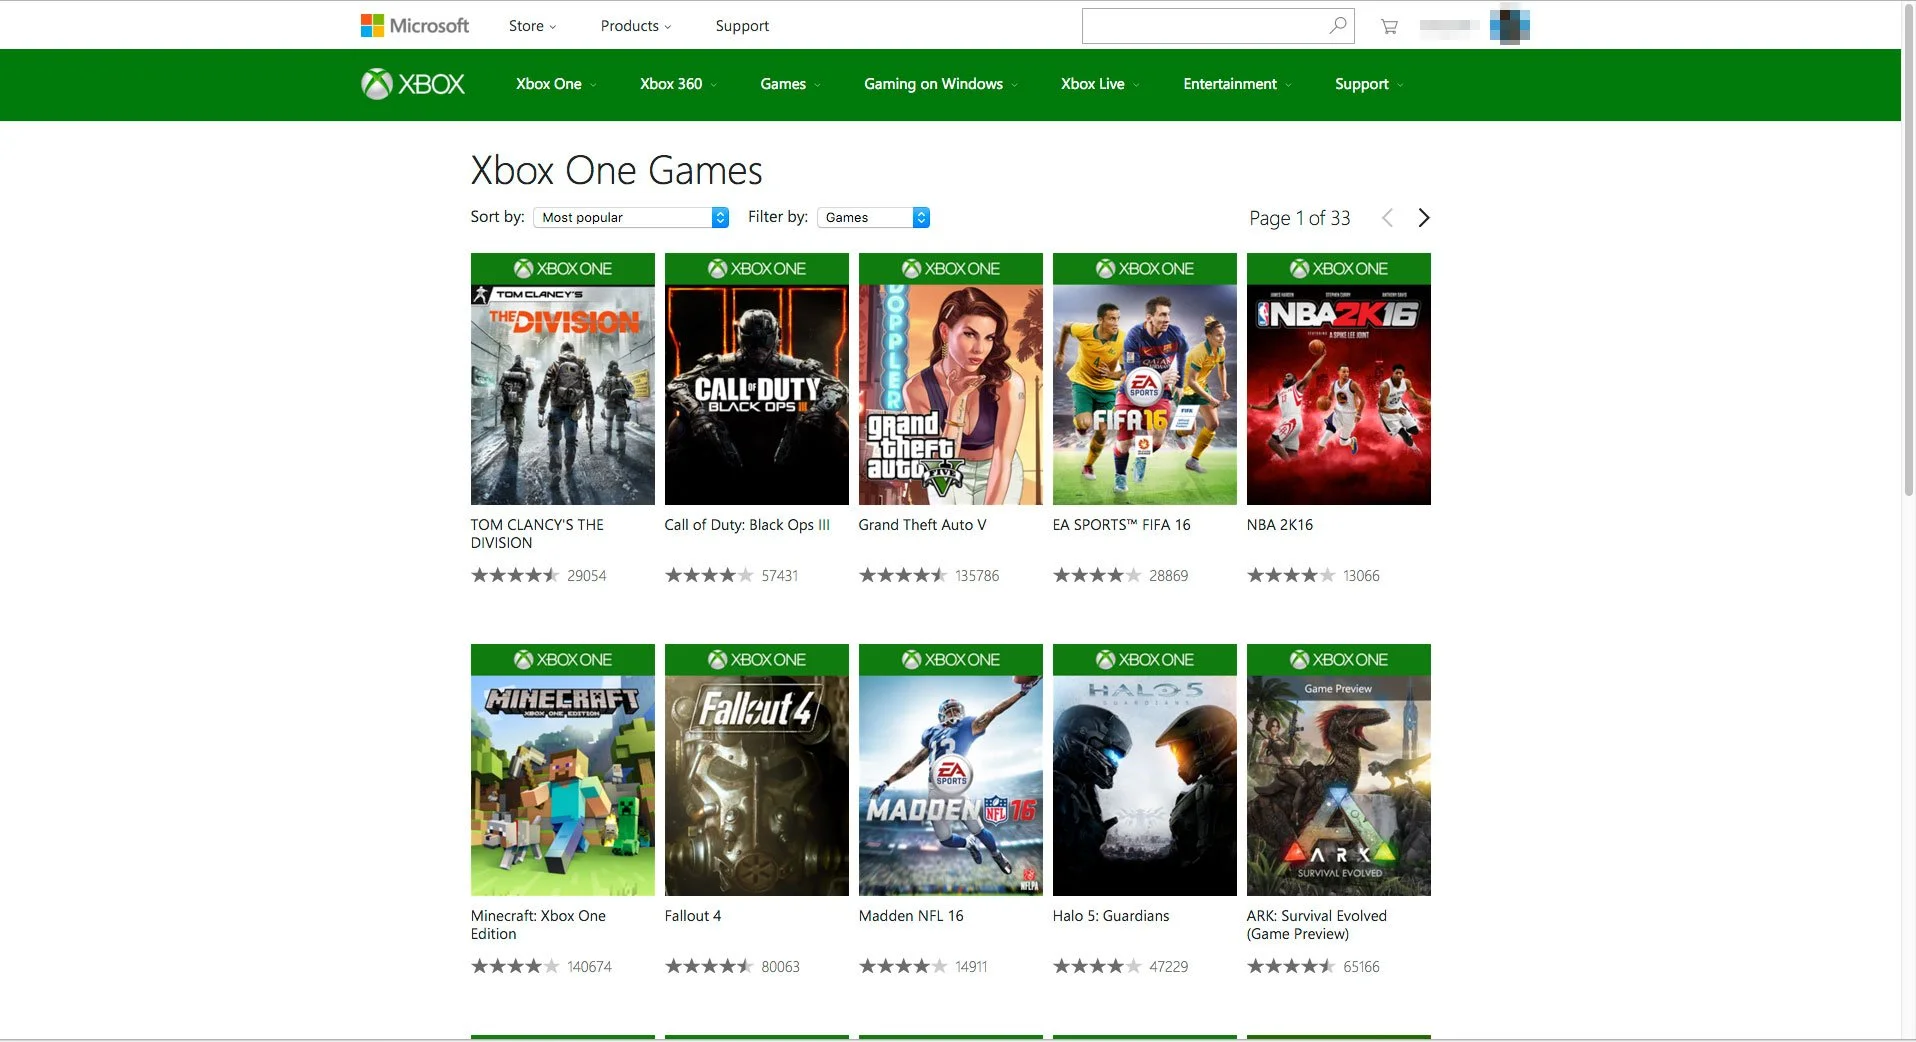 The Division обошла Call of Duty по популярности на Xbox One - фото 1